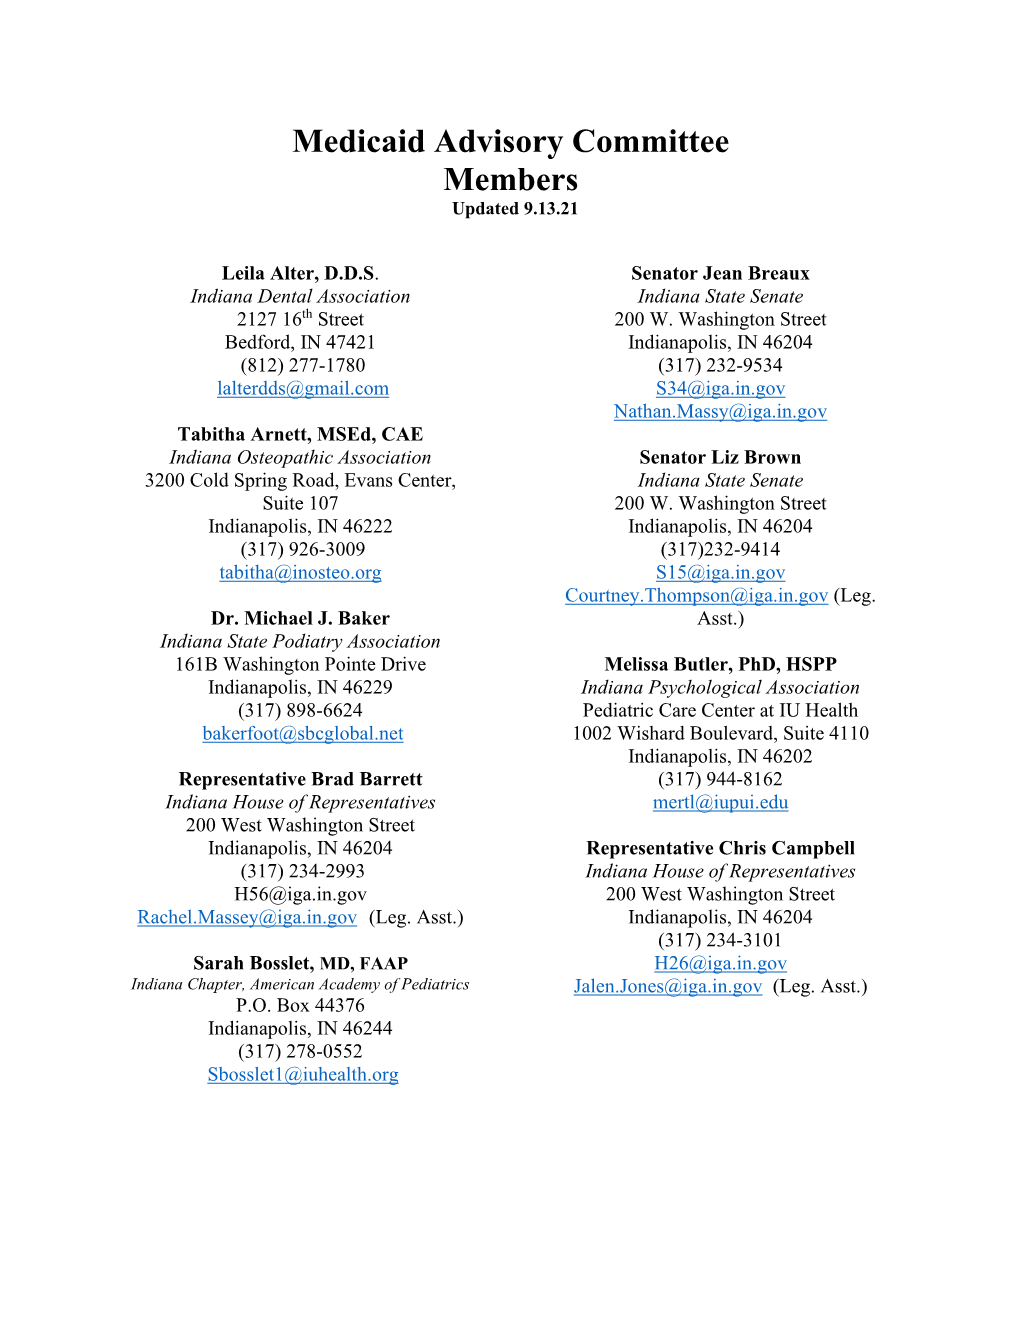 Medicaid Advisory Committee Members Updated 9.13.21